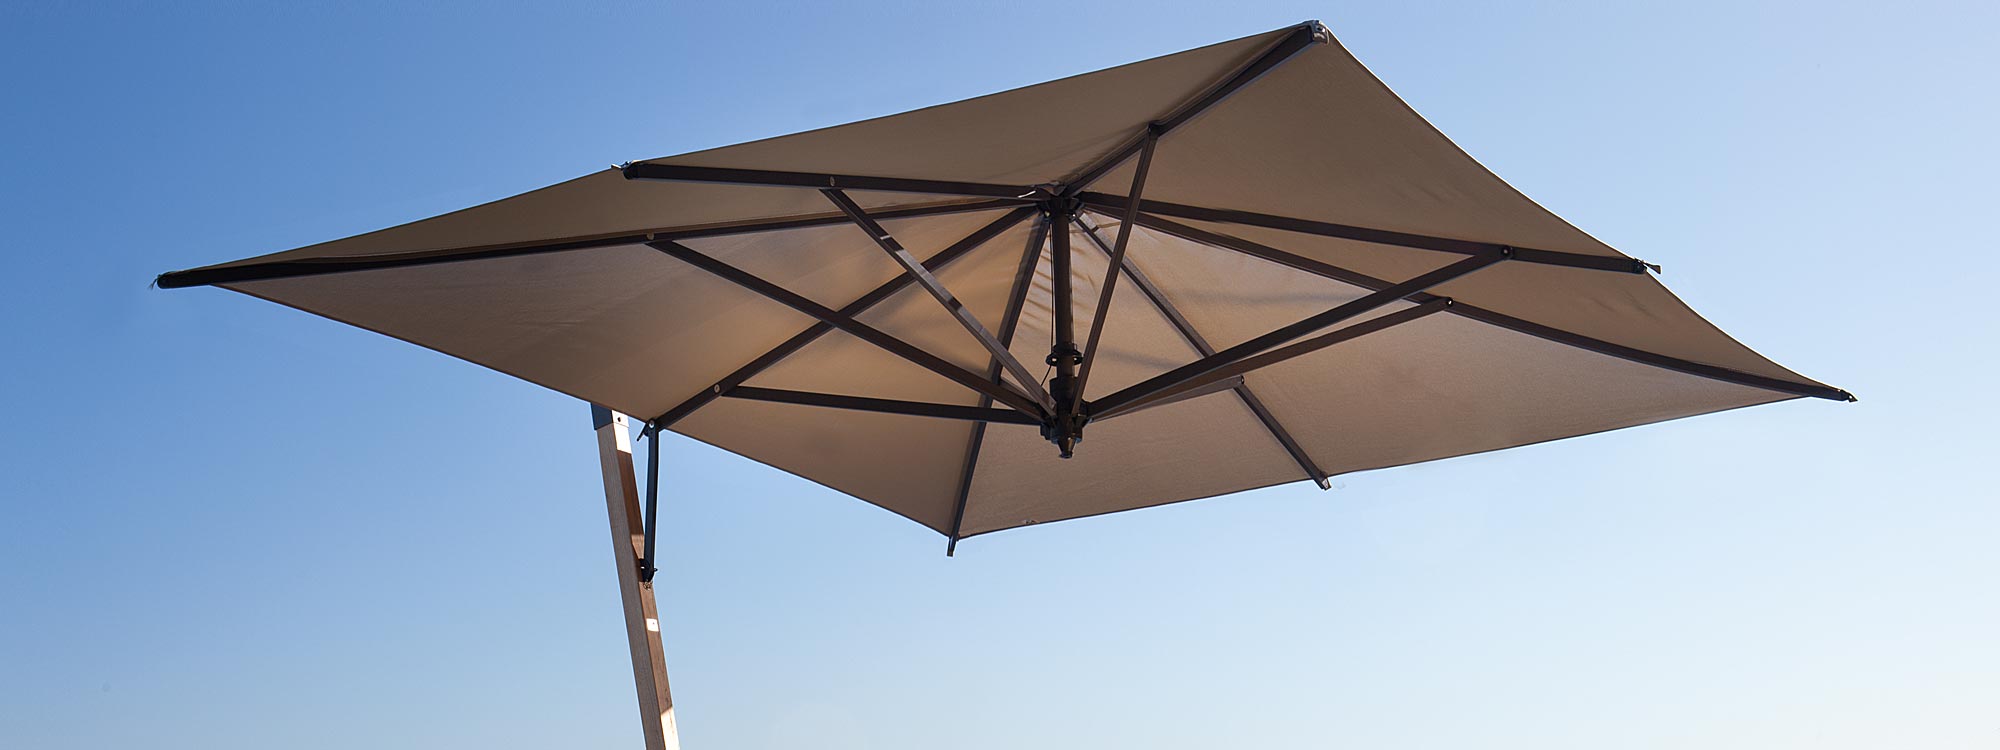 Image of underside of FIM Capri cantilever parasol's square canopy and aluminium ribs